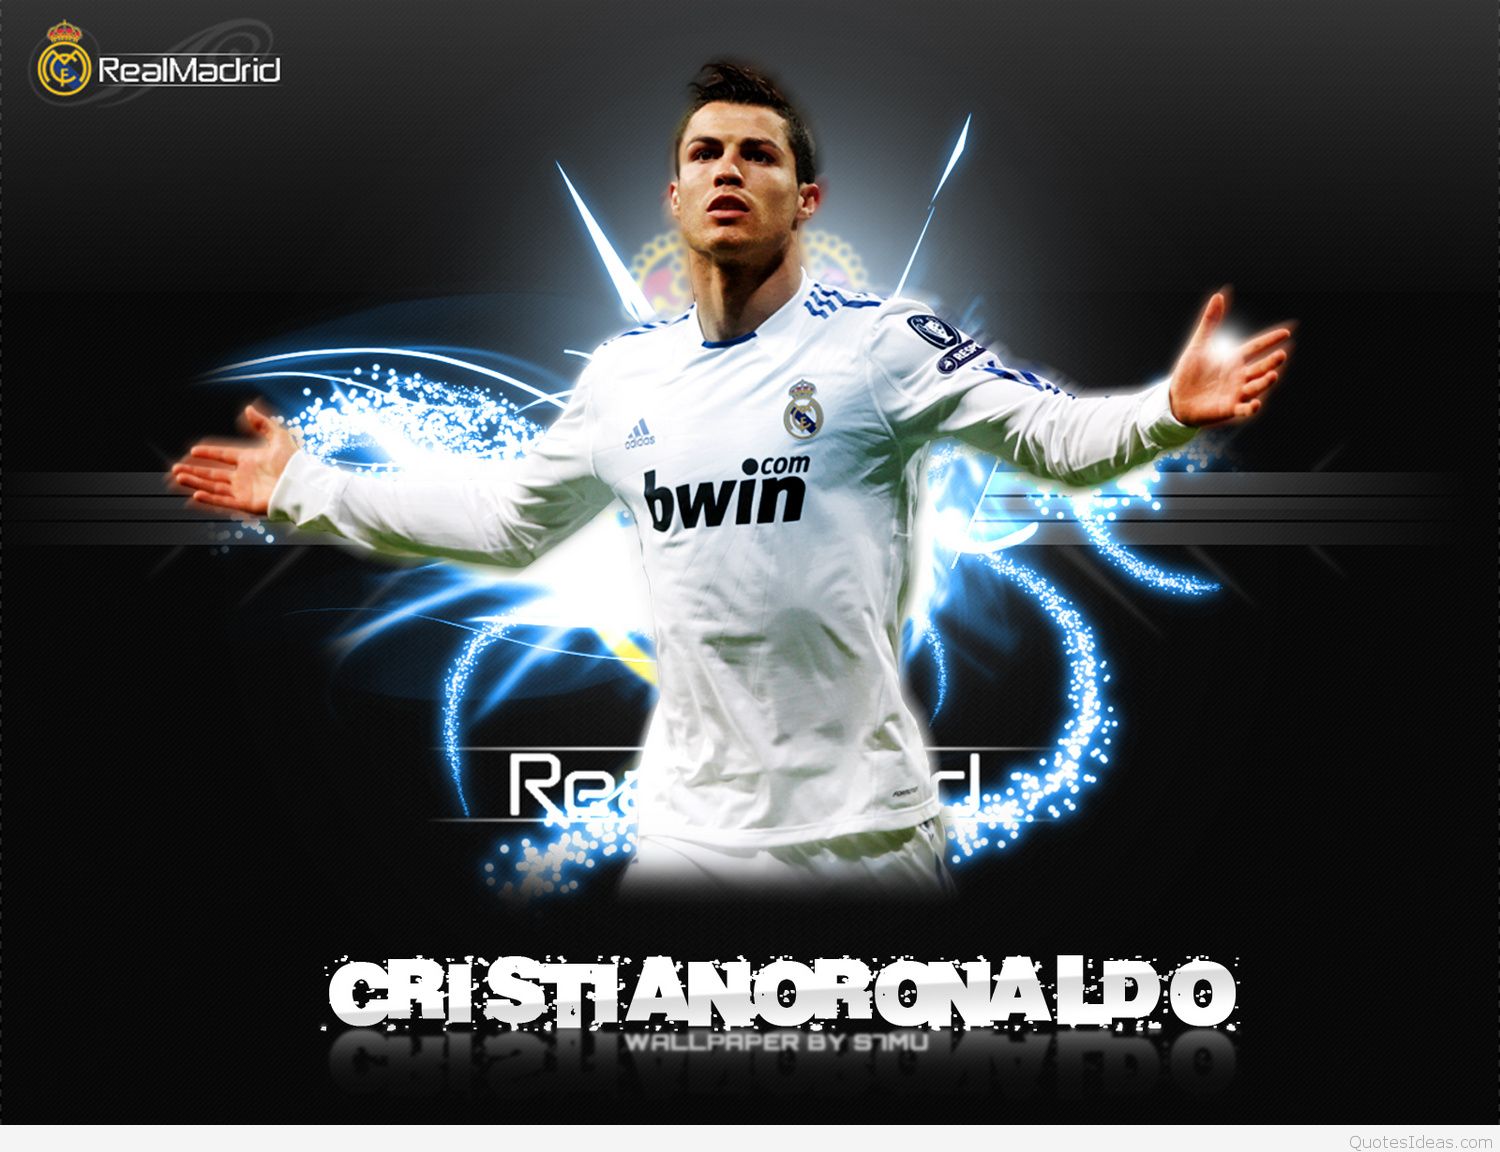 genial fondo de pantalla del real madrid,jugador de fútbol,jugador de fútbol,jugador,fuente,póster